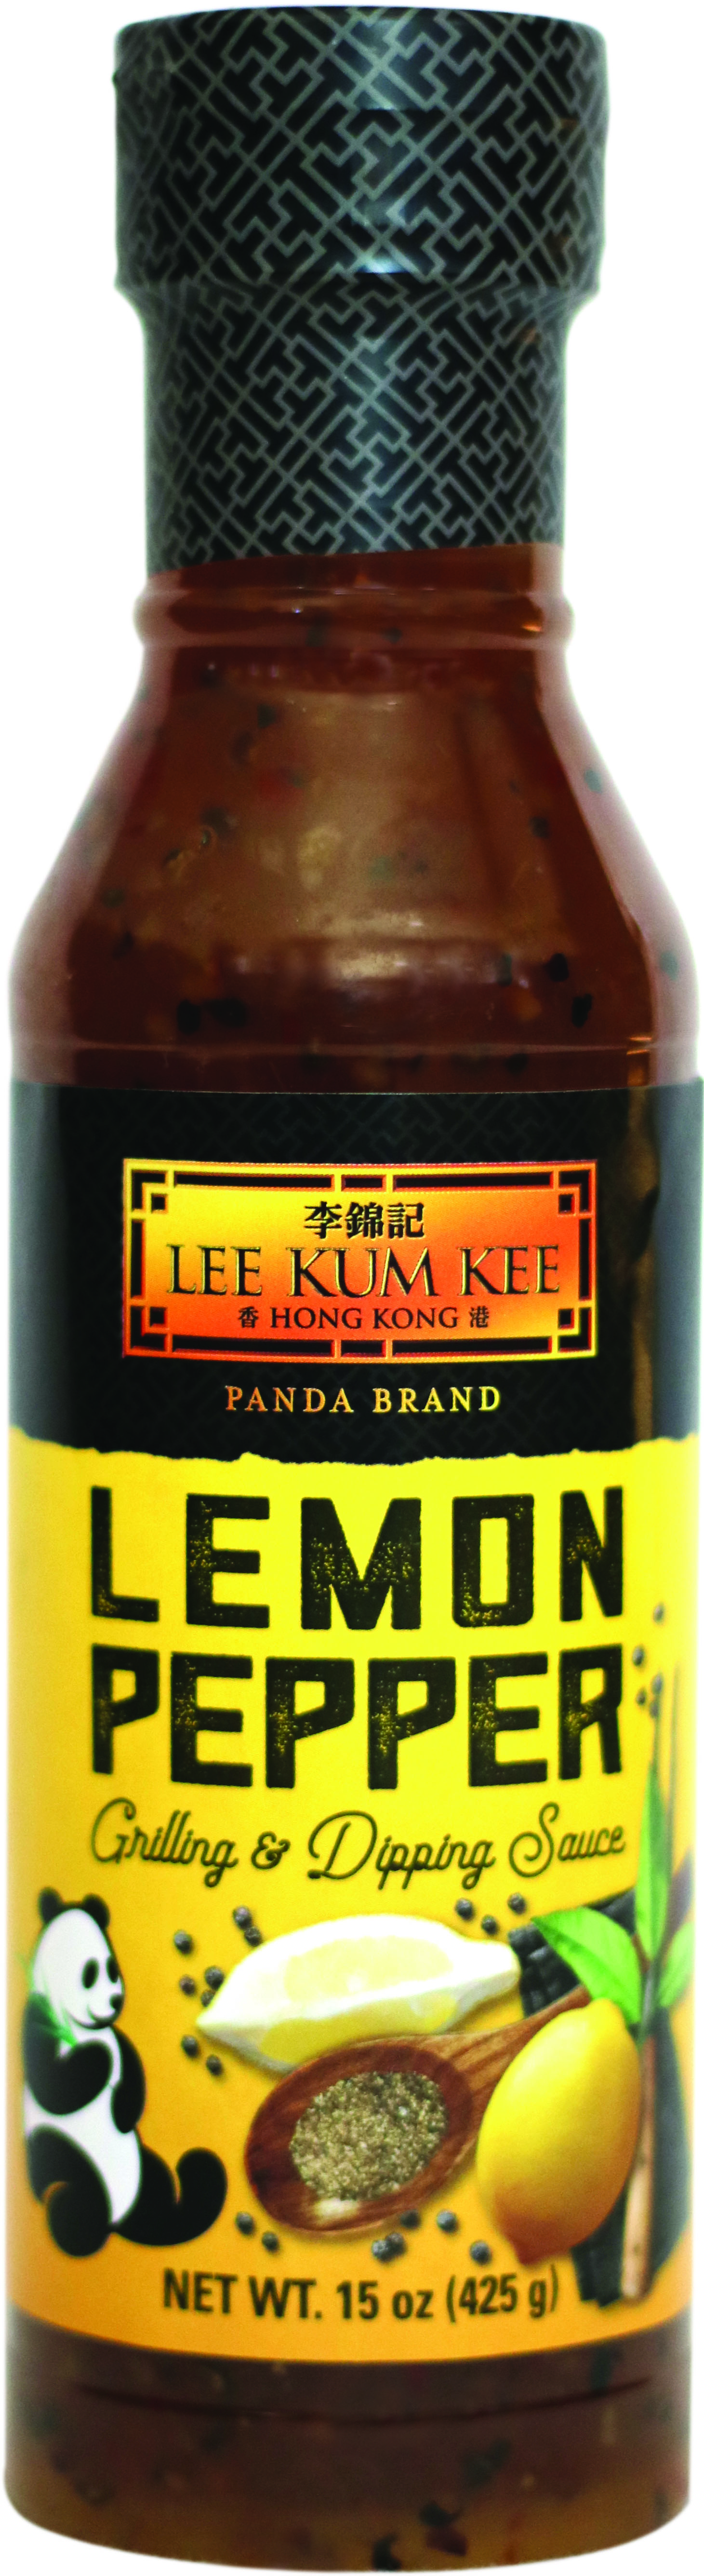 Panda Brand Lemon Pepper Sauce_15oz